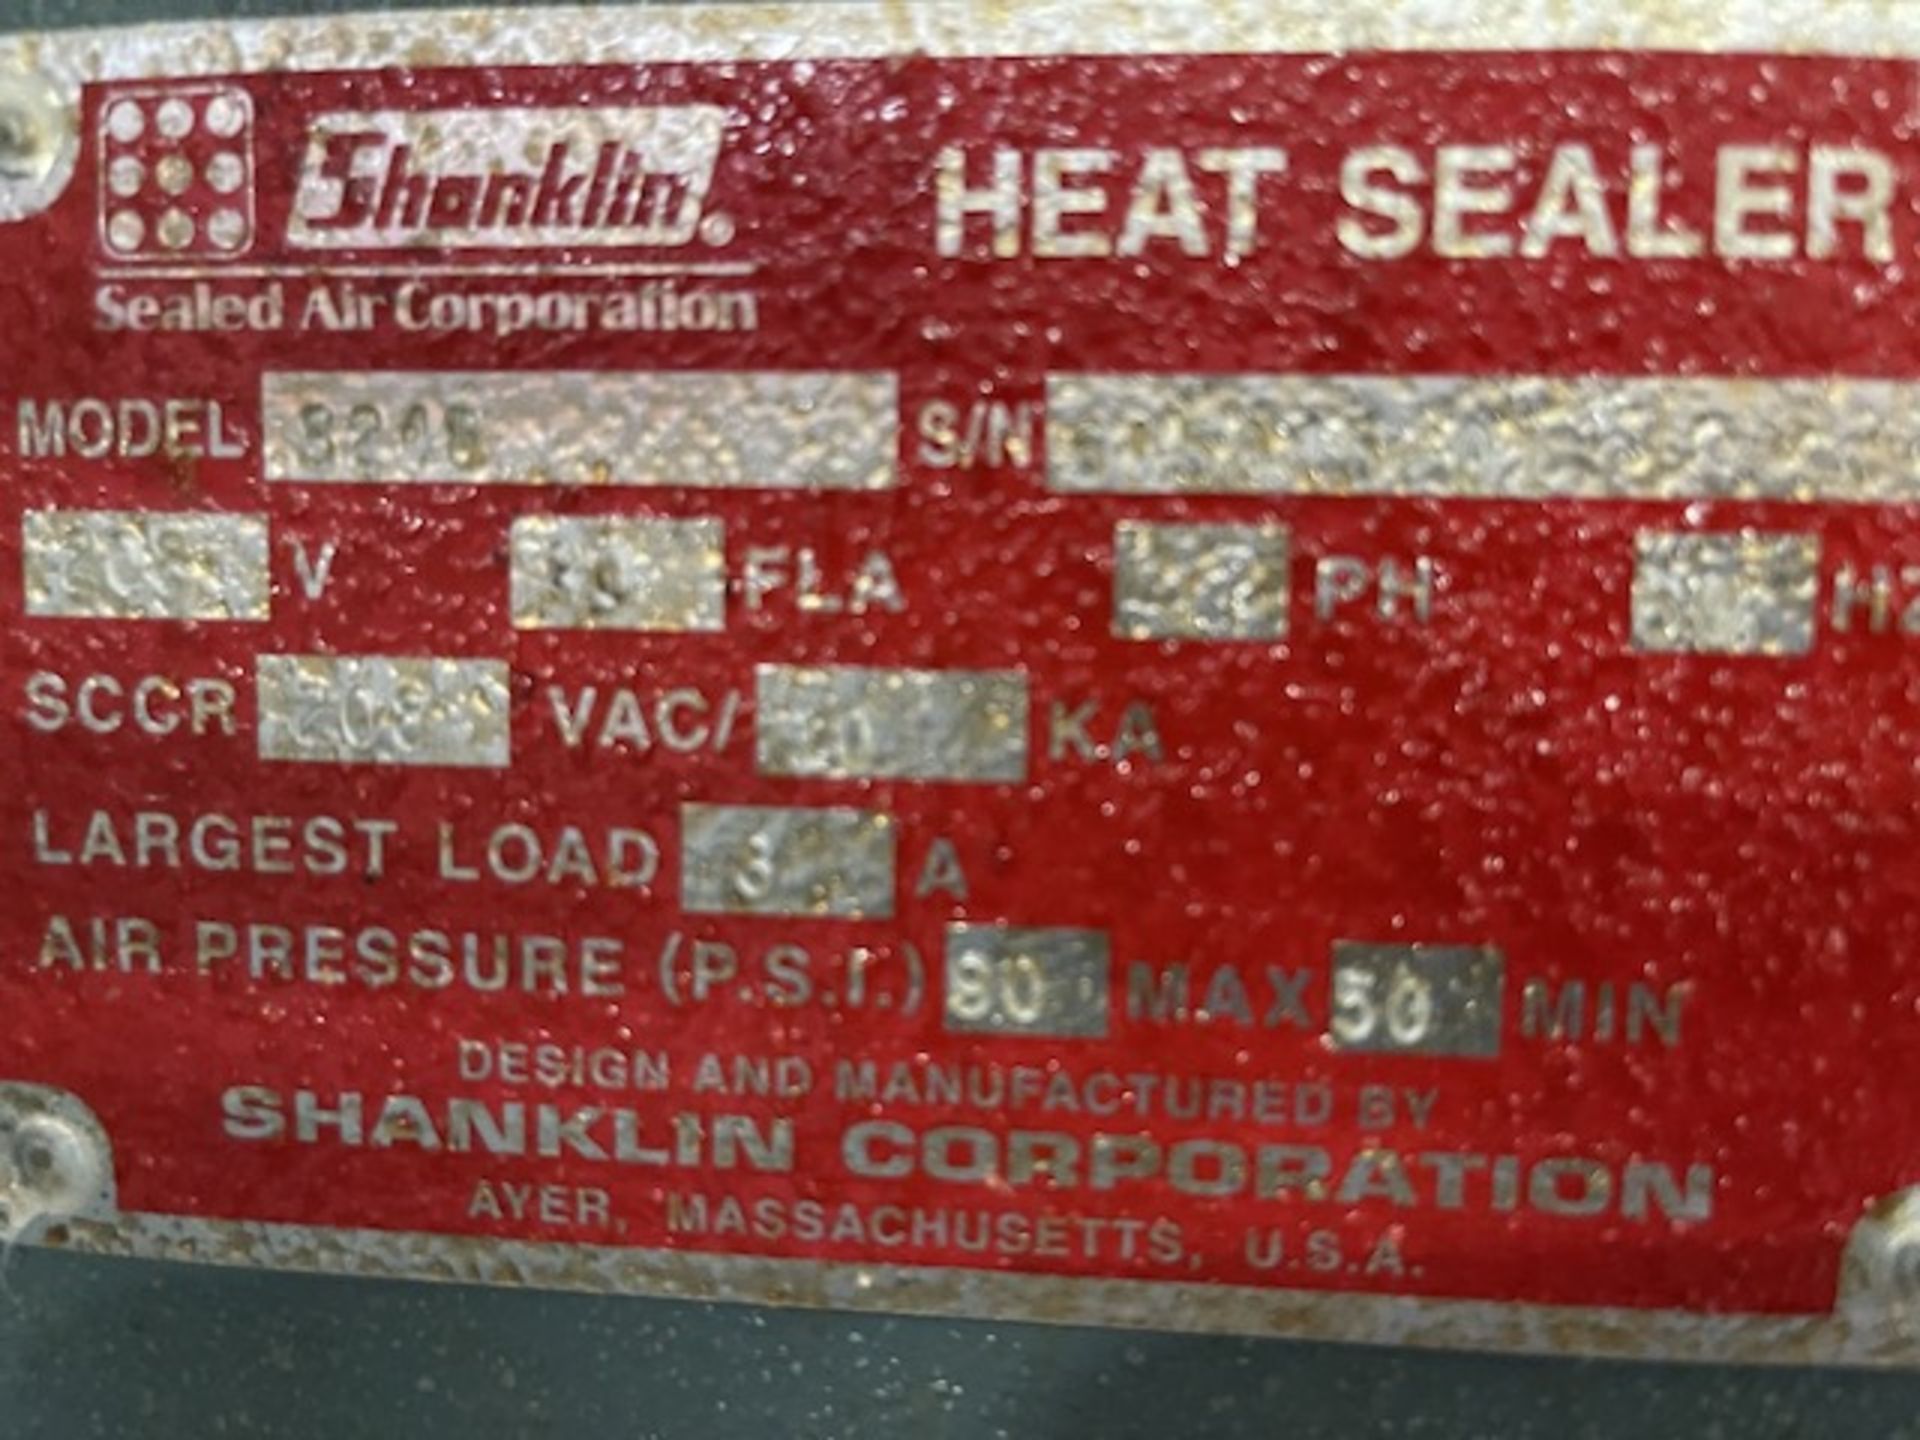 Shanklin Heat Sealer, 20" Wide Belt, 208 Volts, Portable Unit, Model #S24B, Serial #S15045-01 Riggin - Image 3 of 3